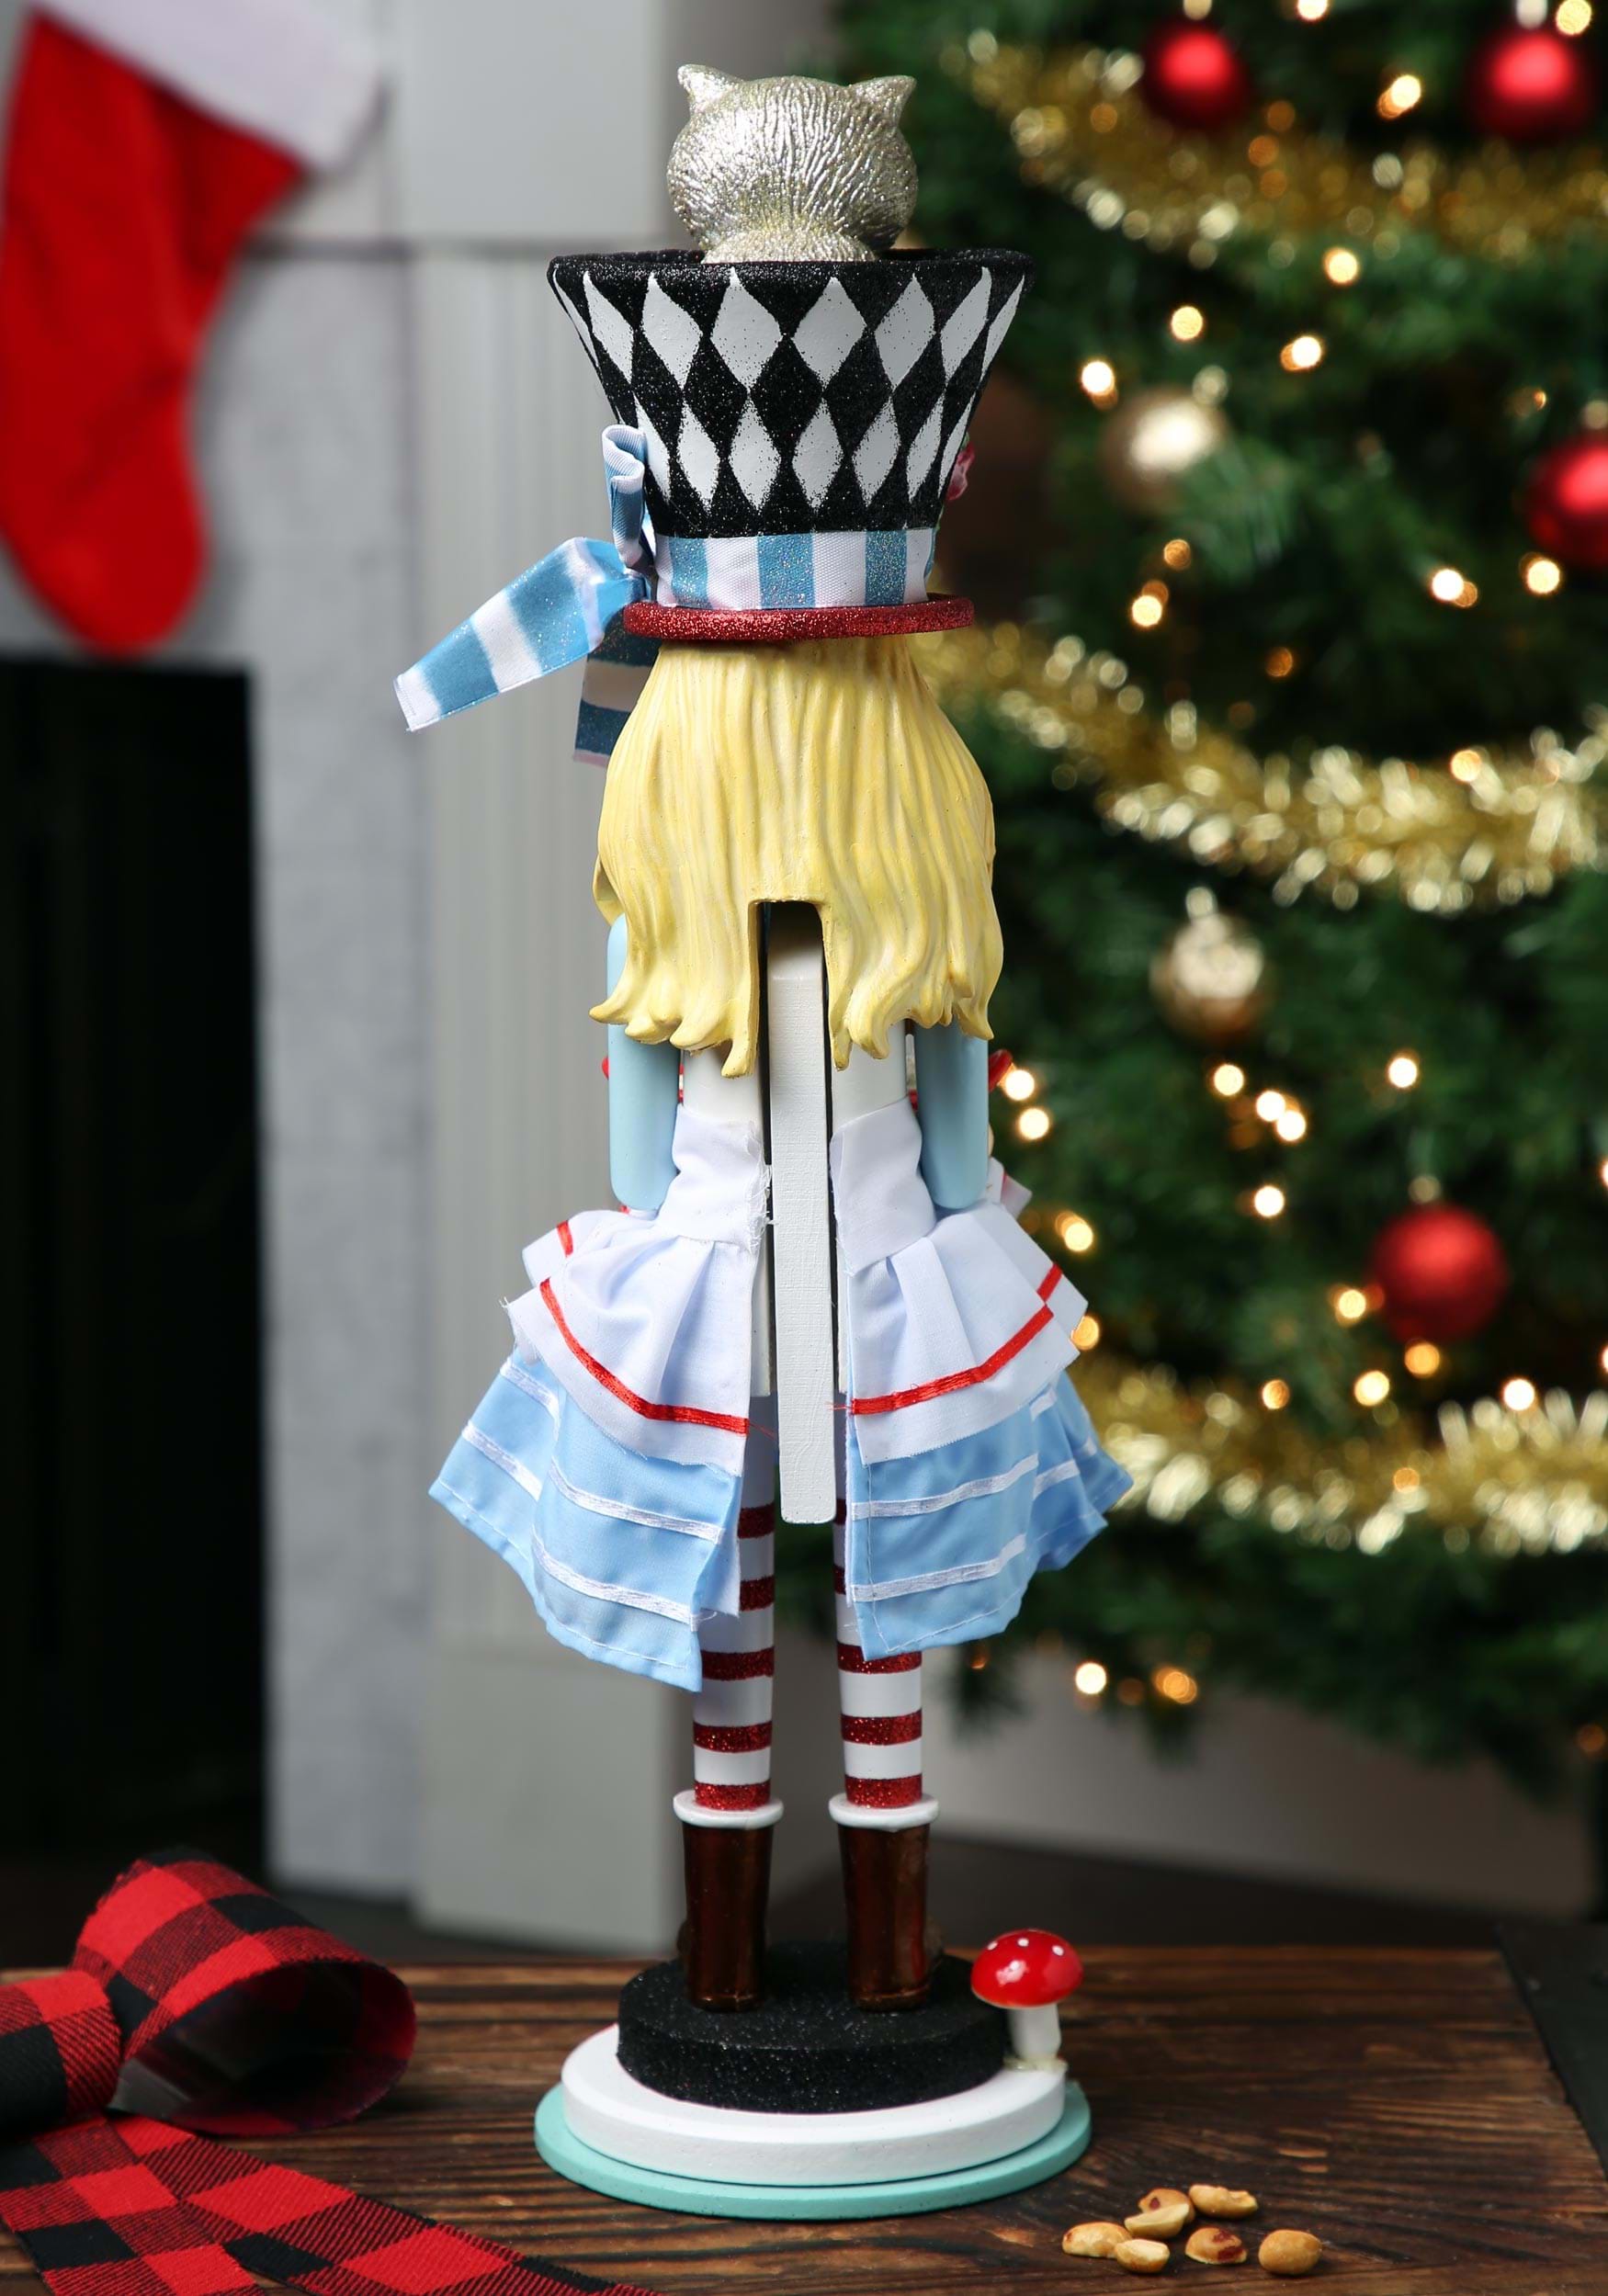 Alice in Wonderland ornaments 5 Piece Christmas Ornament Set